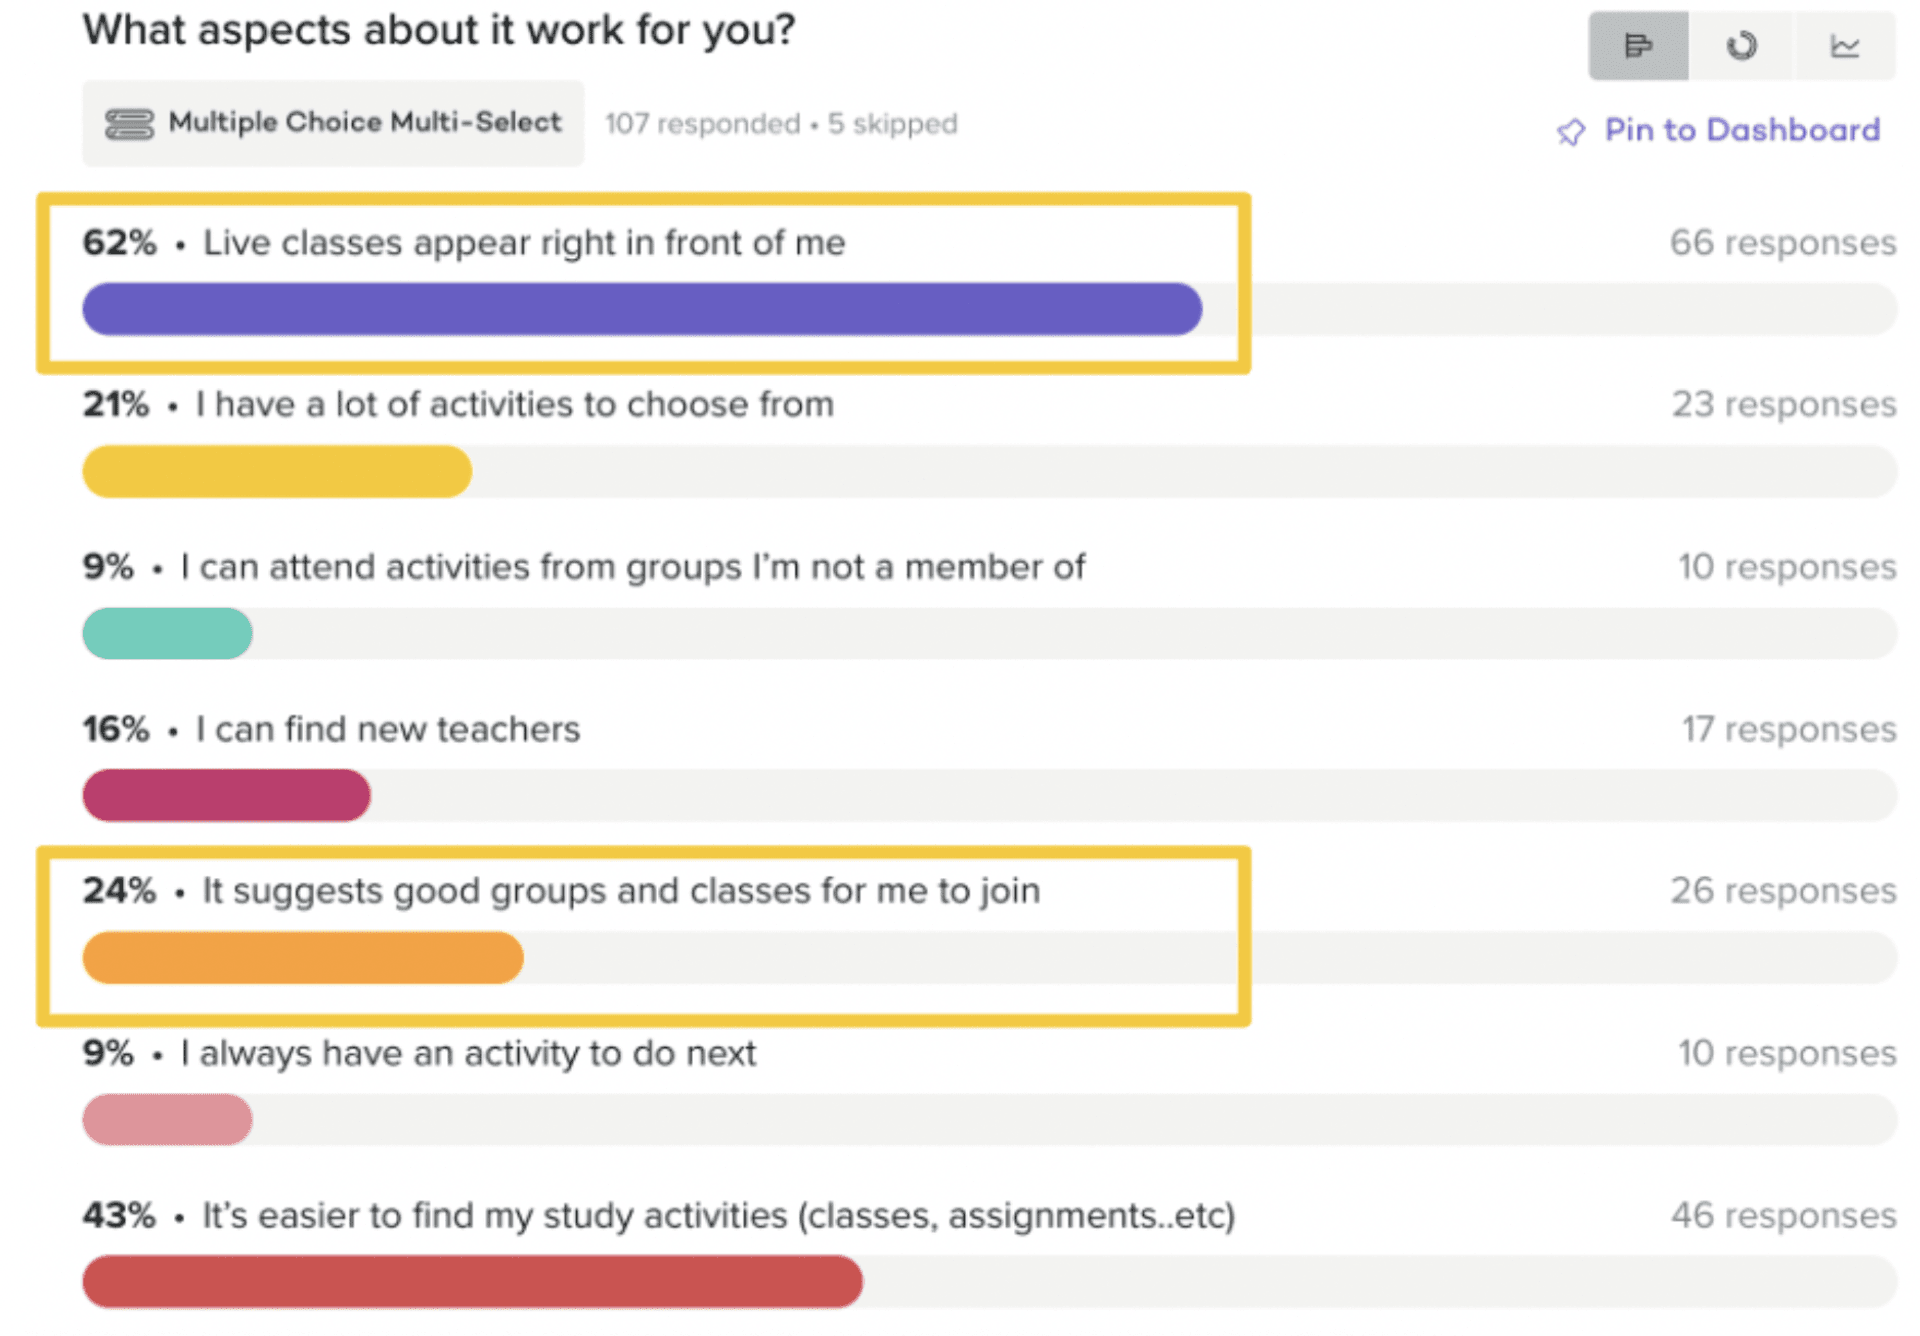 Survey results